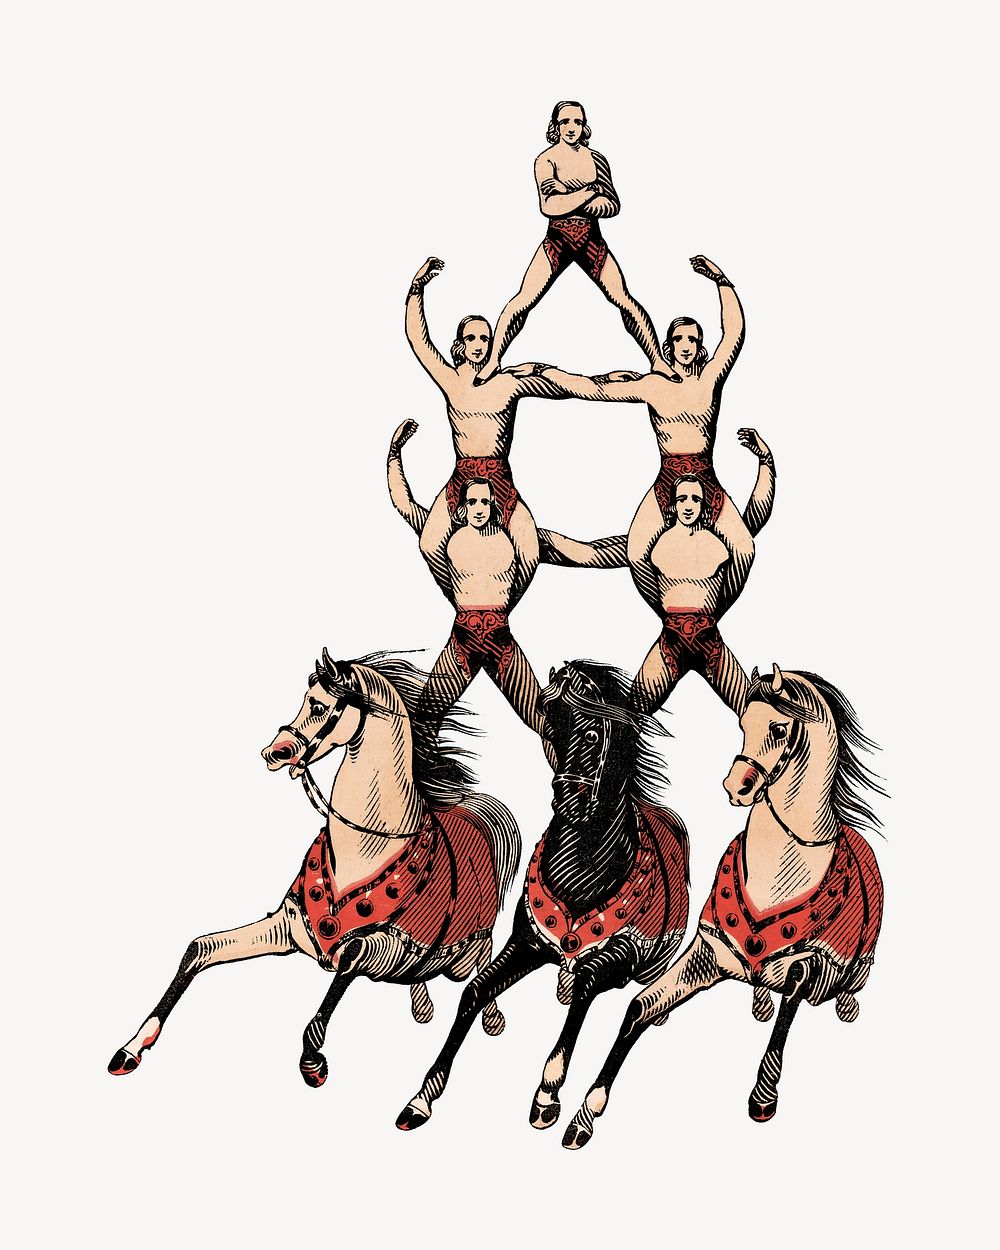 Vintage acrobats on three horses illustration. Remixed by rawpixel. 